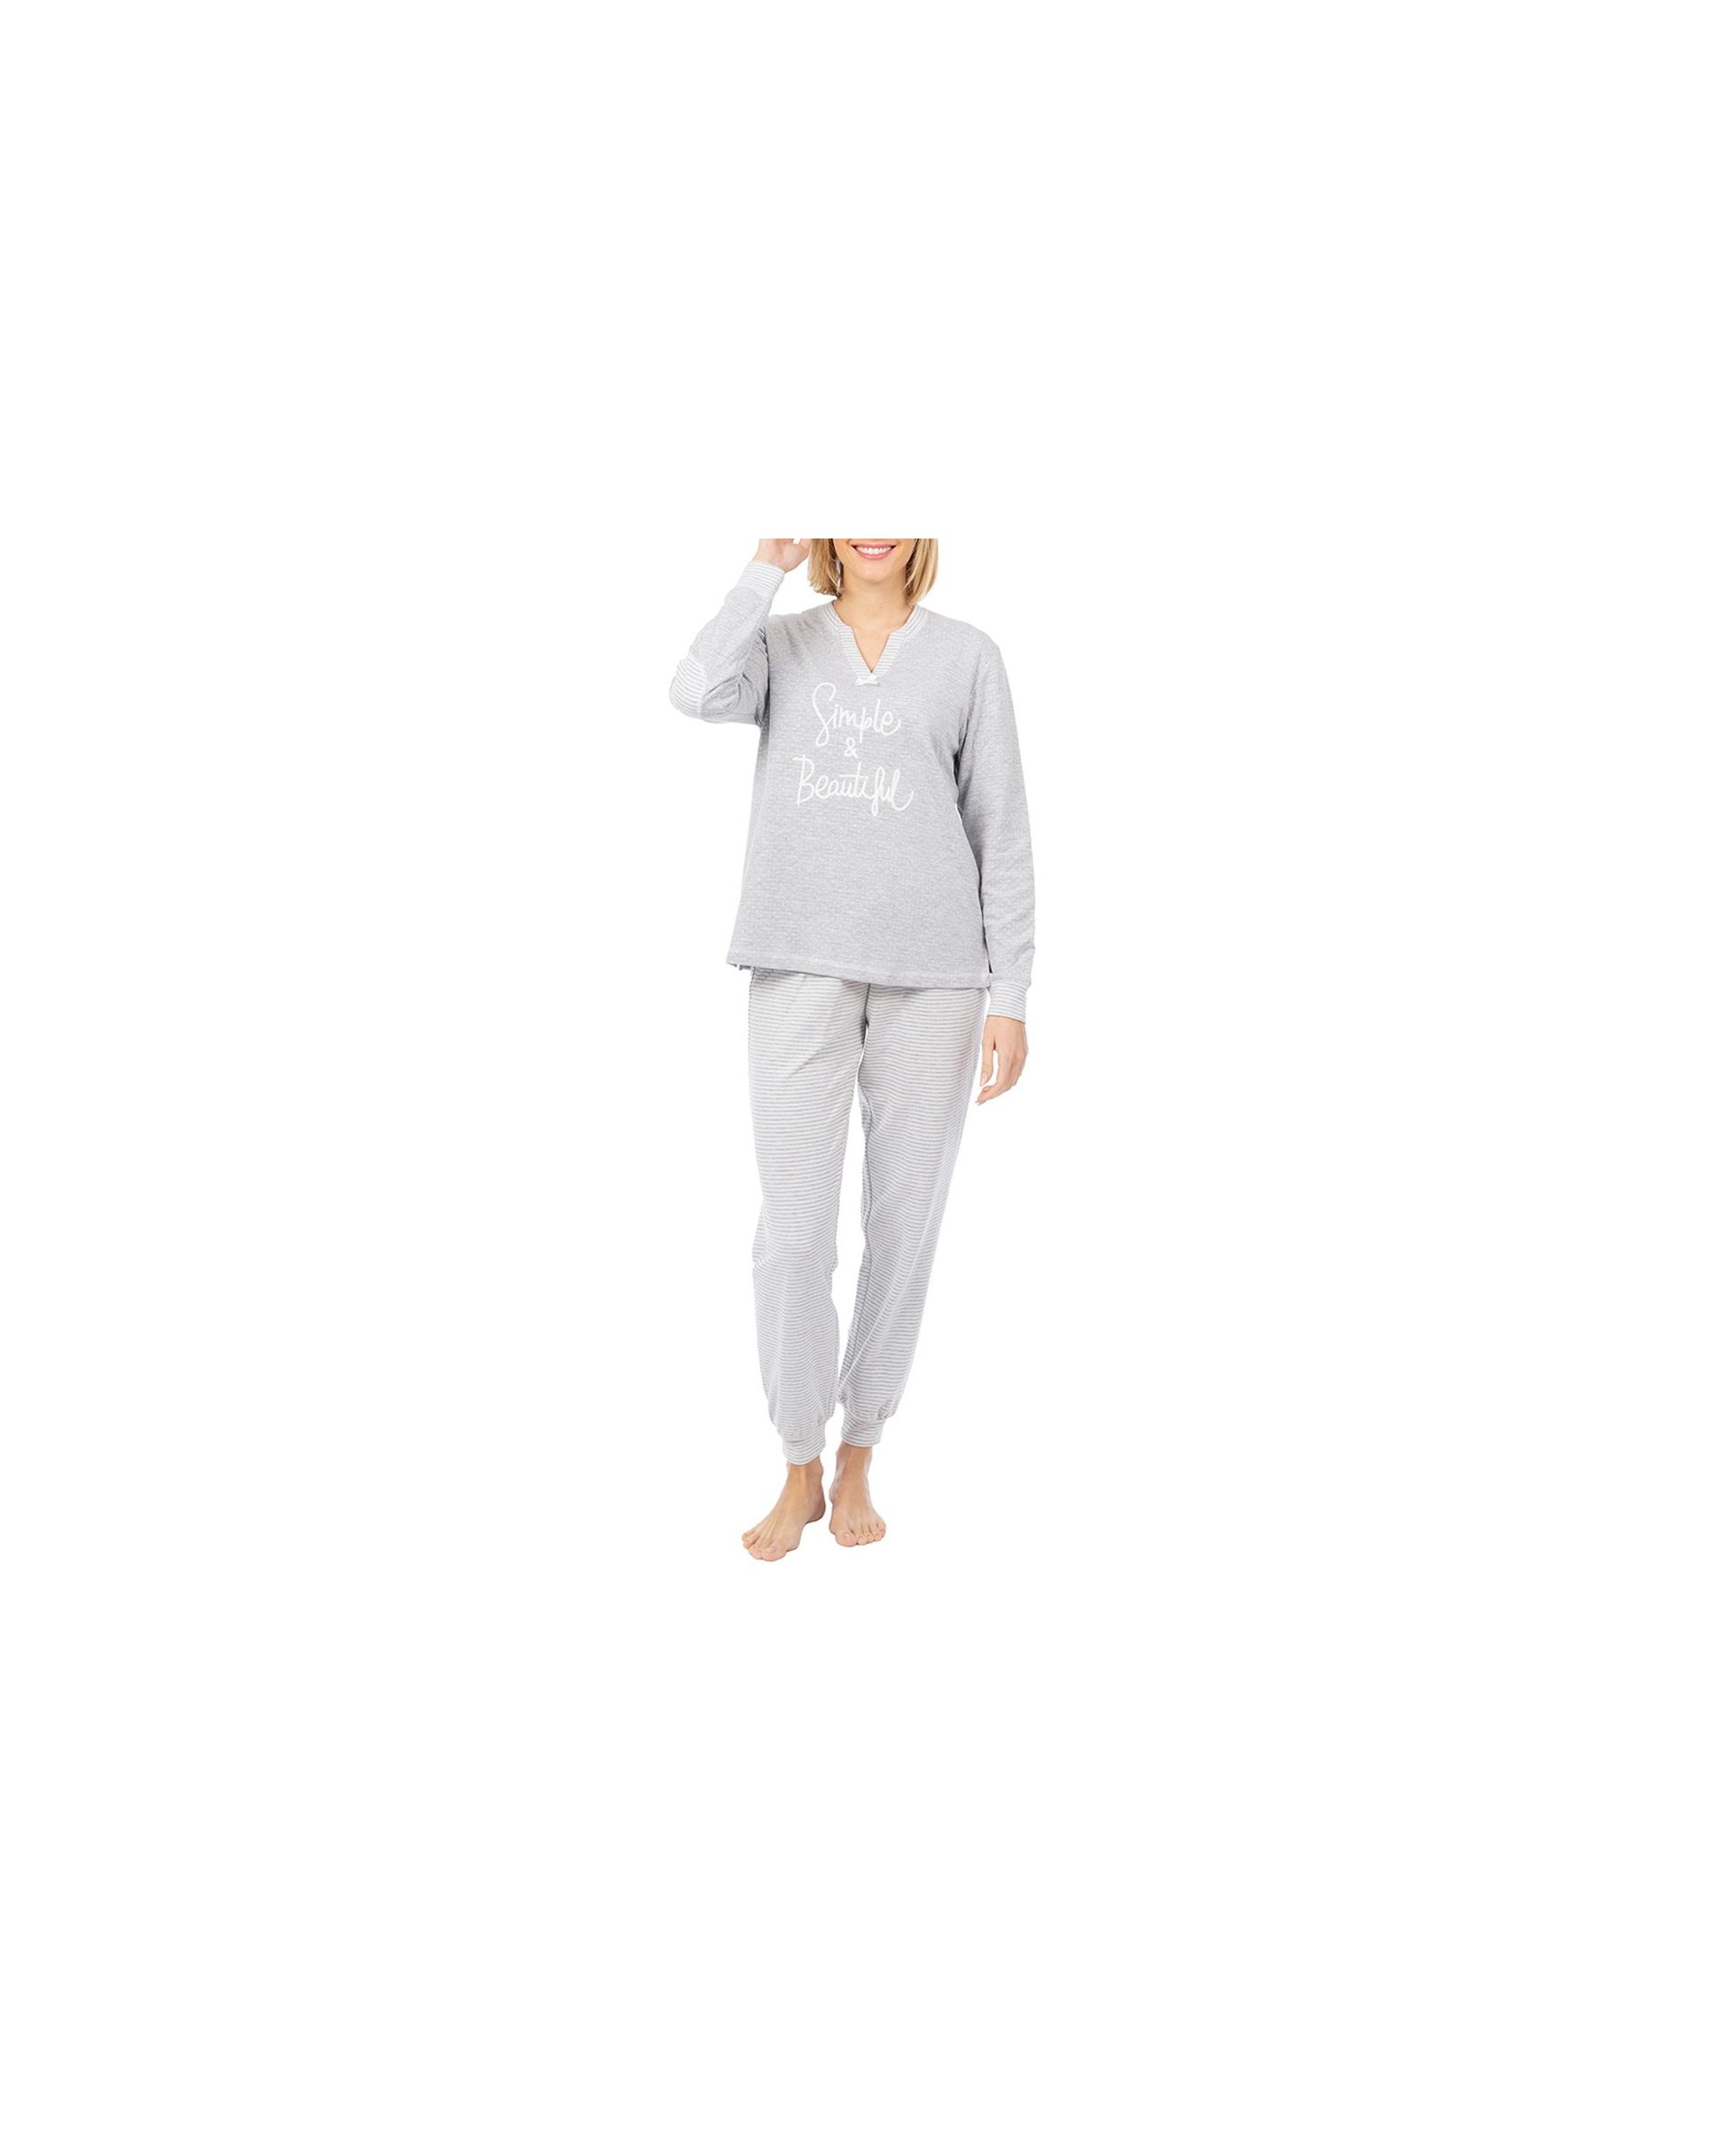 Women's grey striped long sleeve winter pyjamas